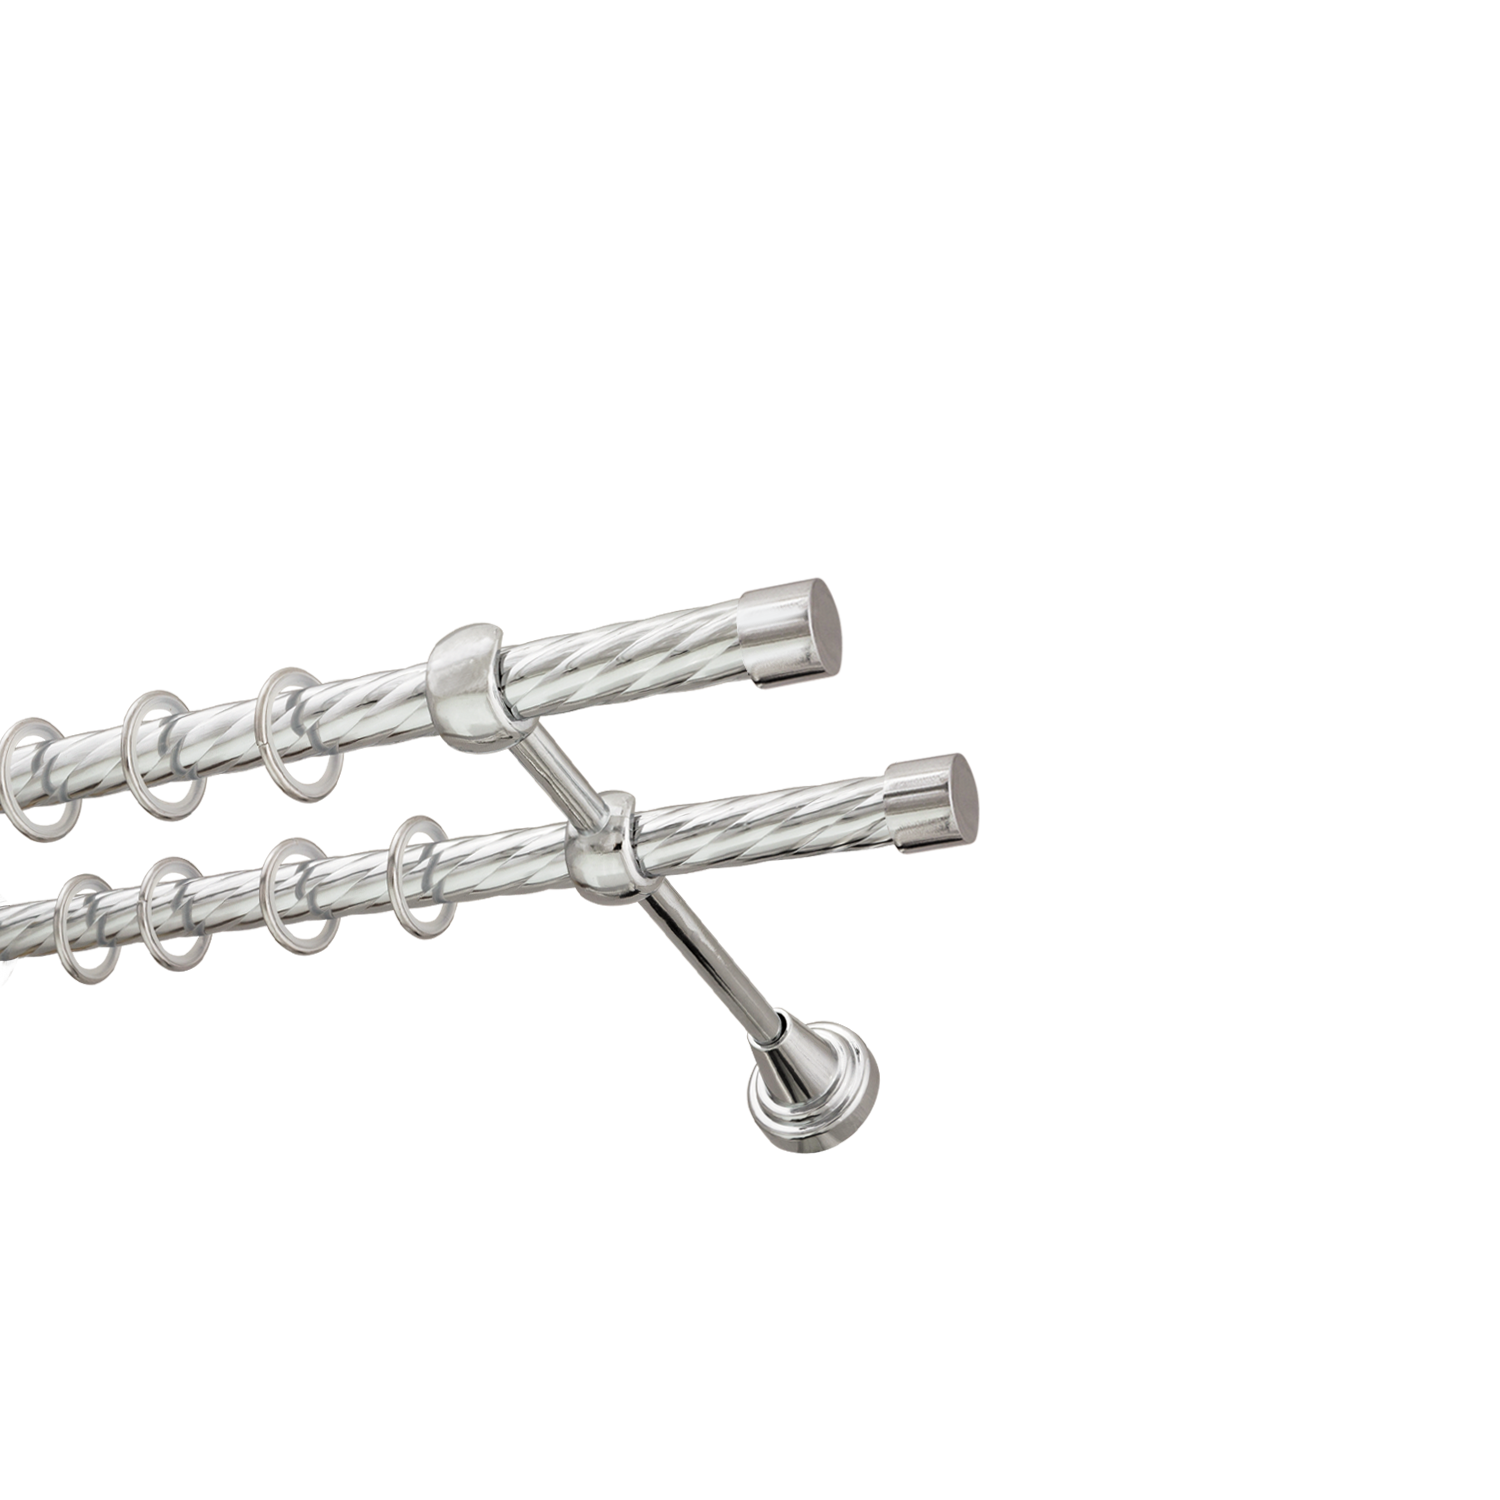 Металлический карниз для штор Заглушка, двухрядный 16/16 мм, серебро, витая штанга, длина 180 см - фото Wikidecor.ru